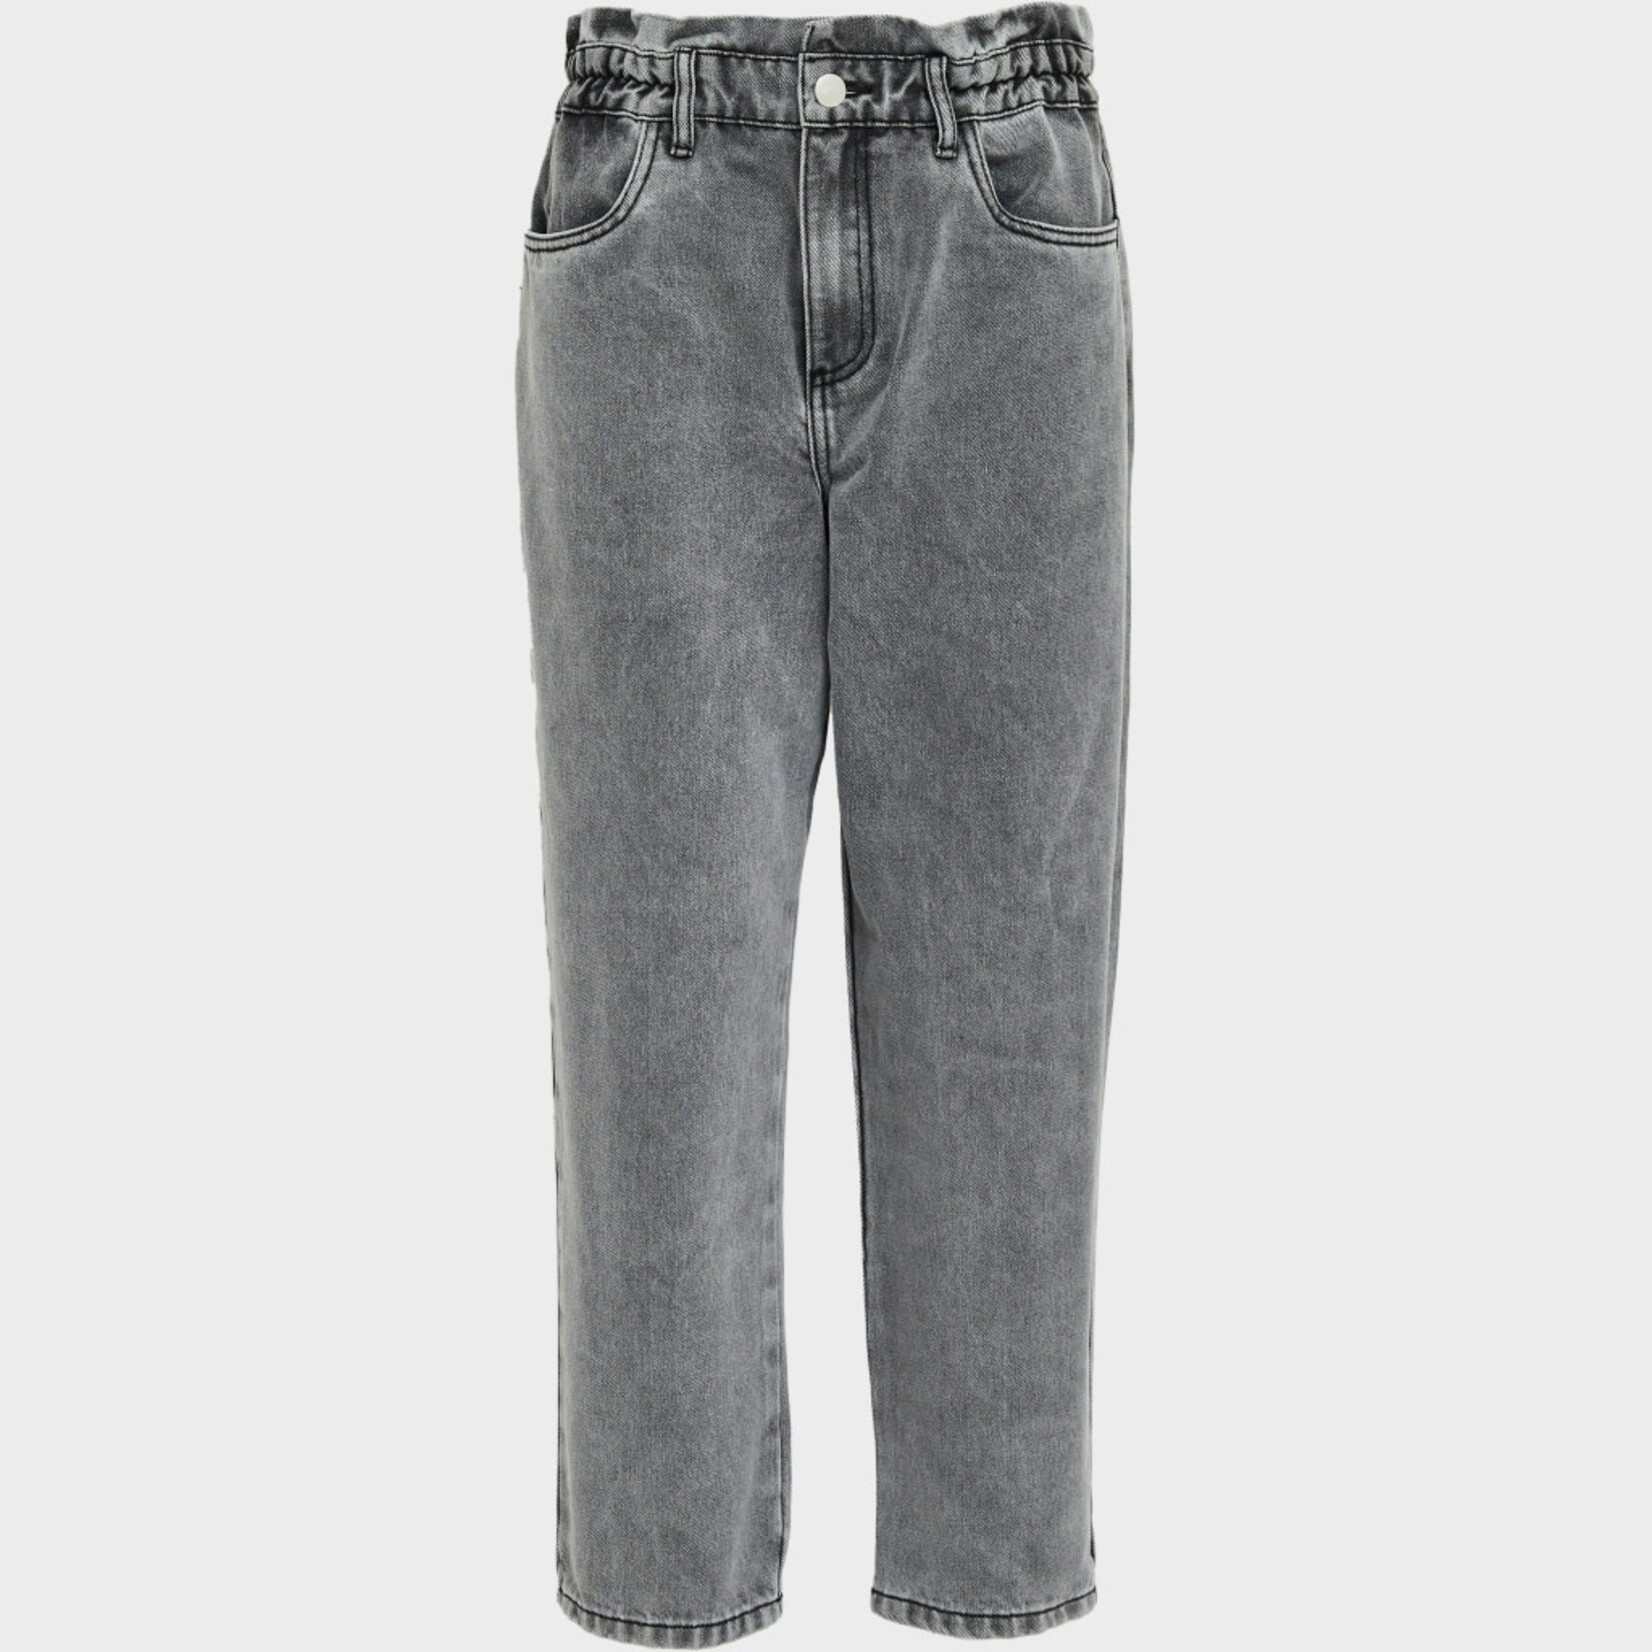 Minus Dina nova high jeans Light grey wash